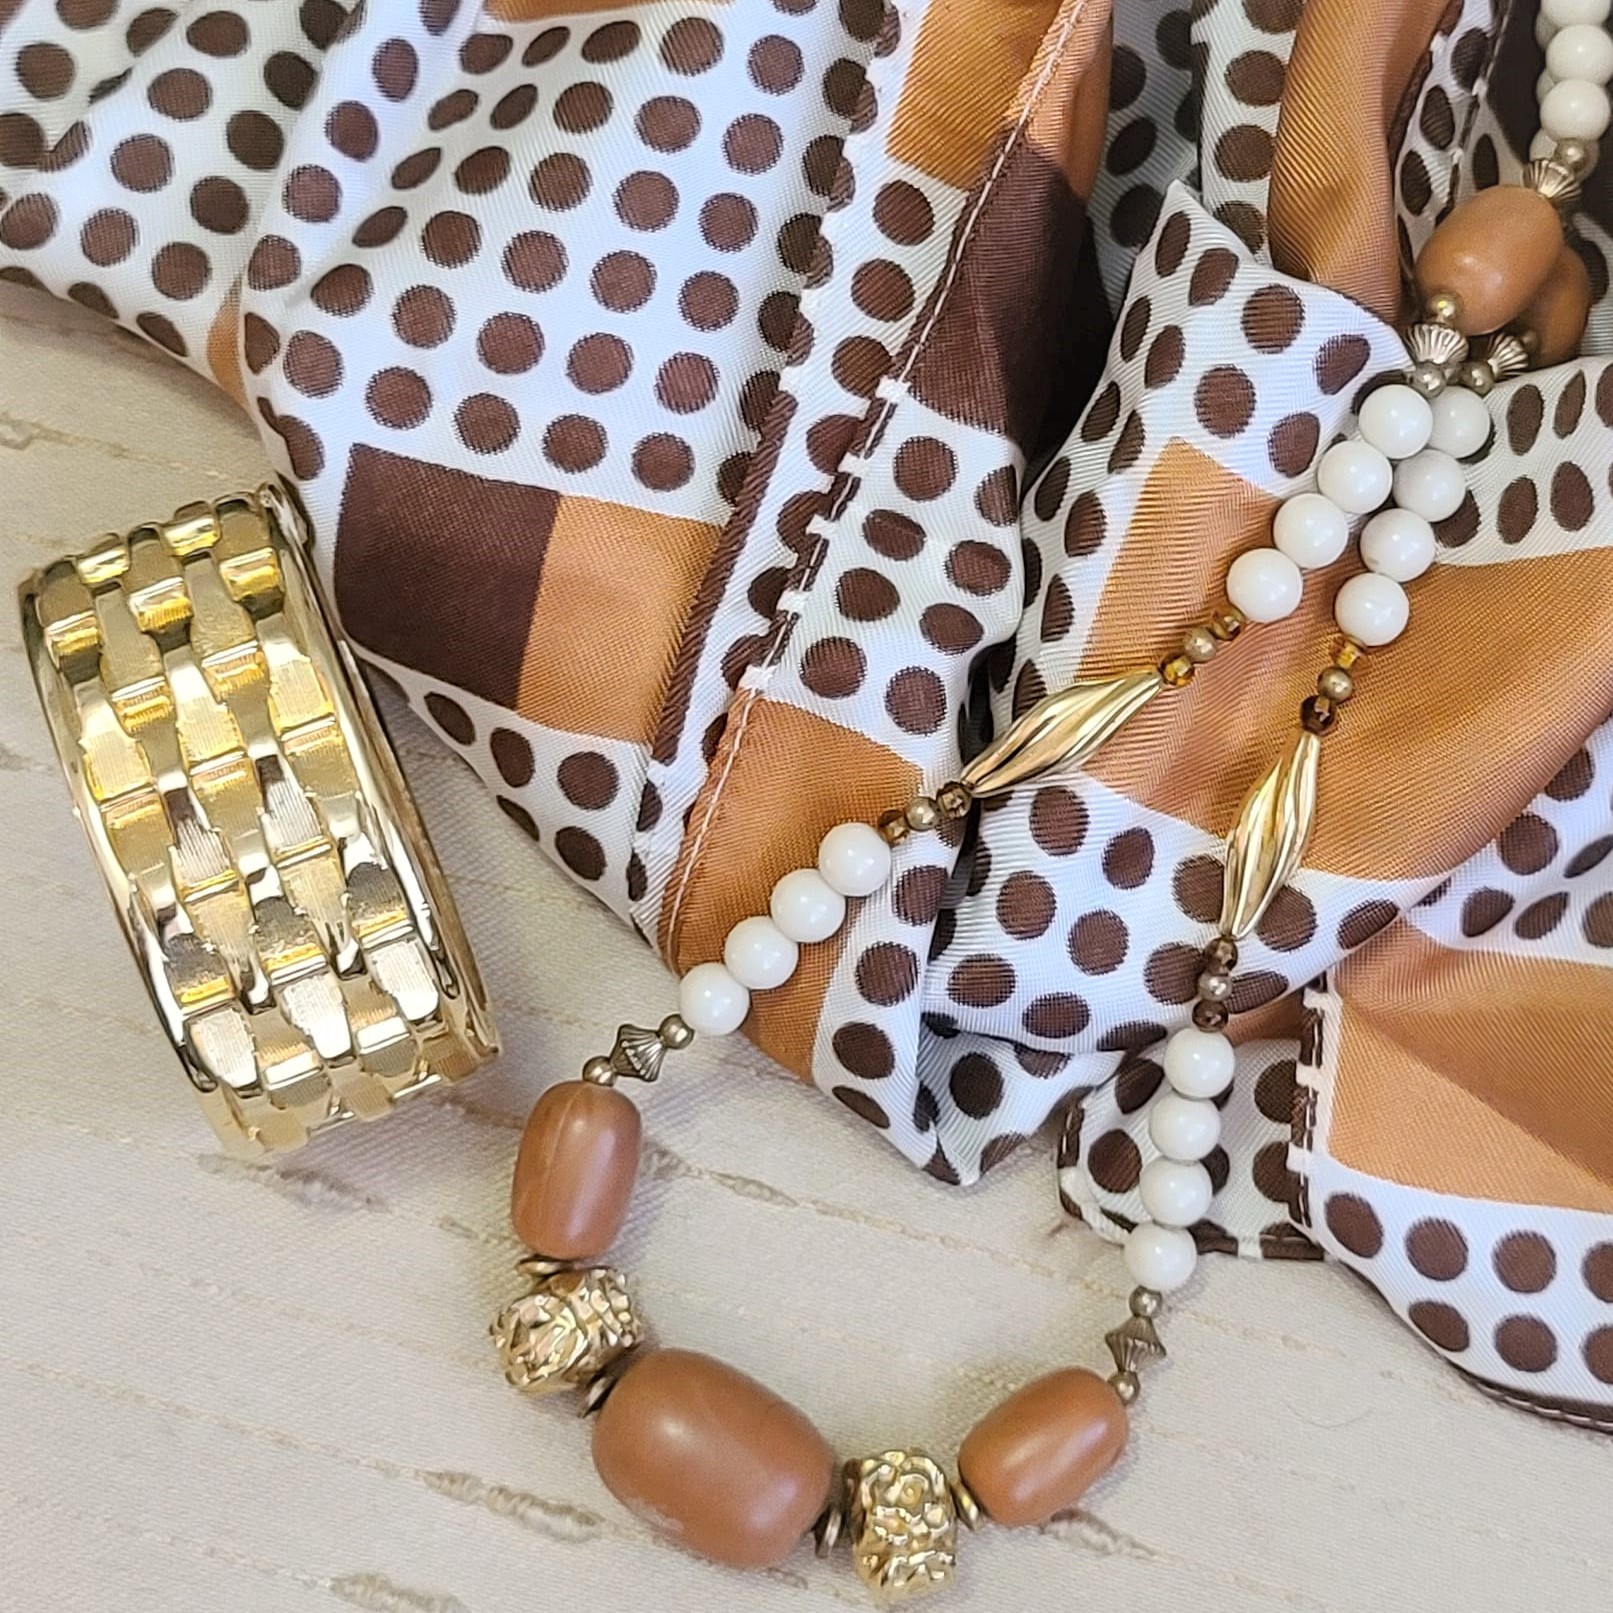 Vintage 1970's brown hues scarf, matched necklace and bracelet